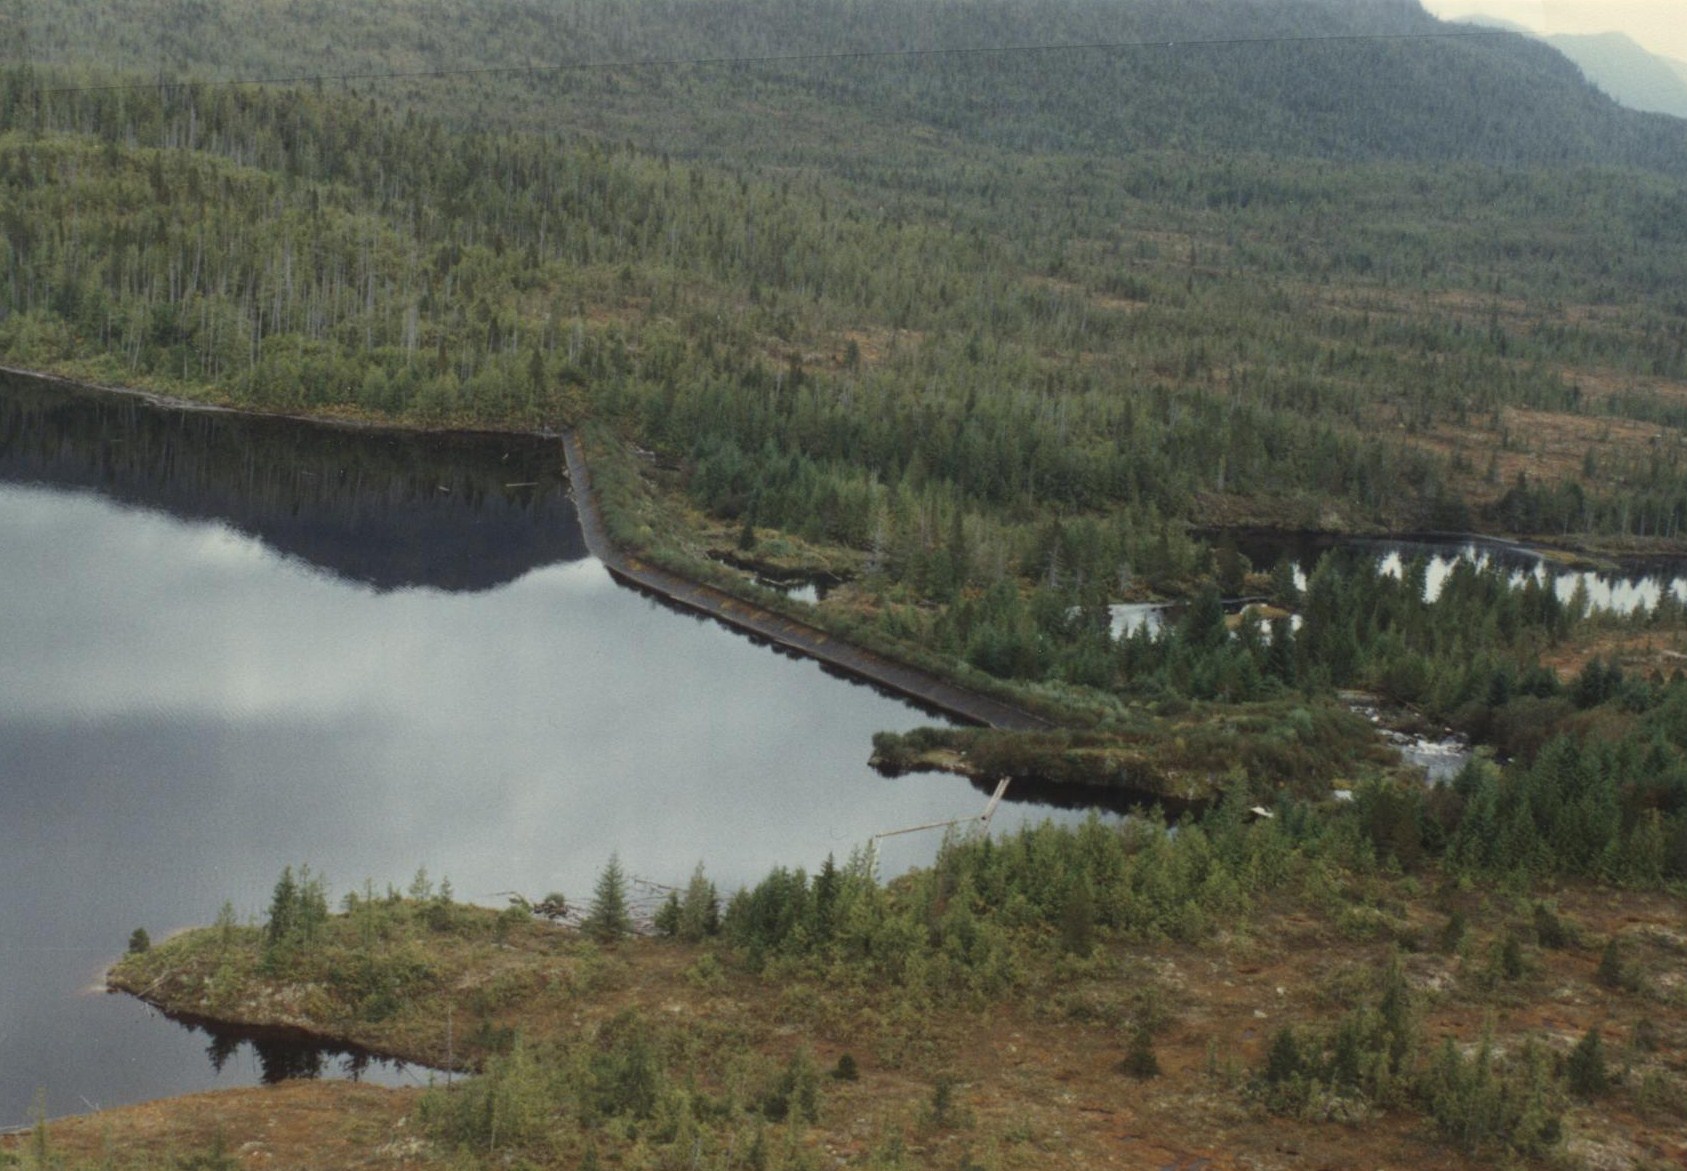 Larger dam